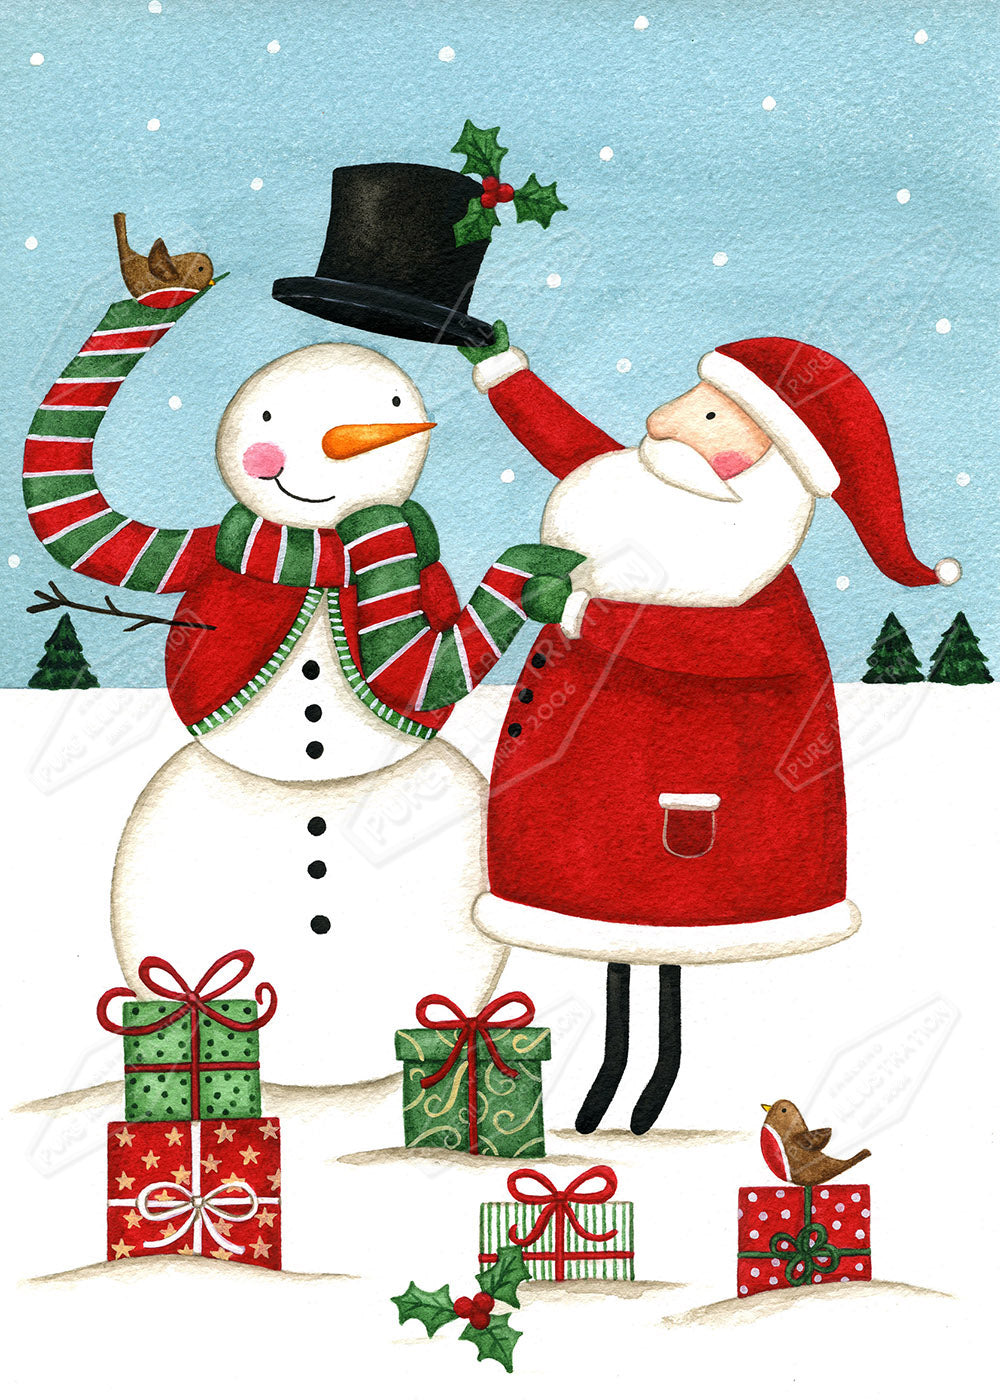 00025233AAI - Santa decorating Snowman by Anna Aitken - Pure Art Licensing Agents International